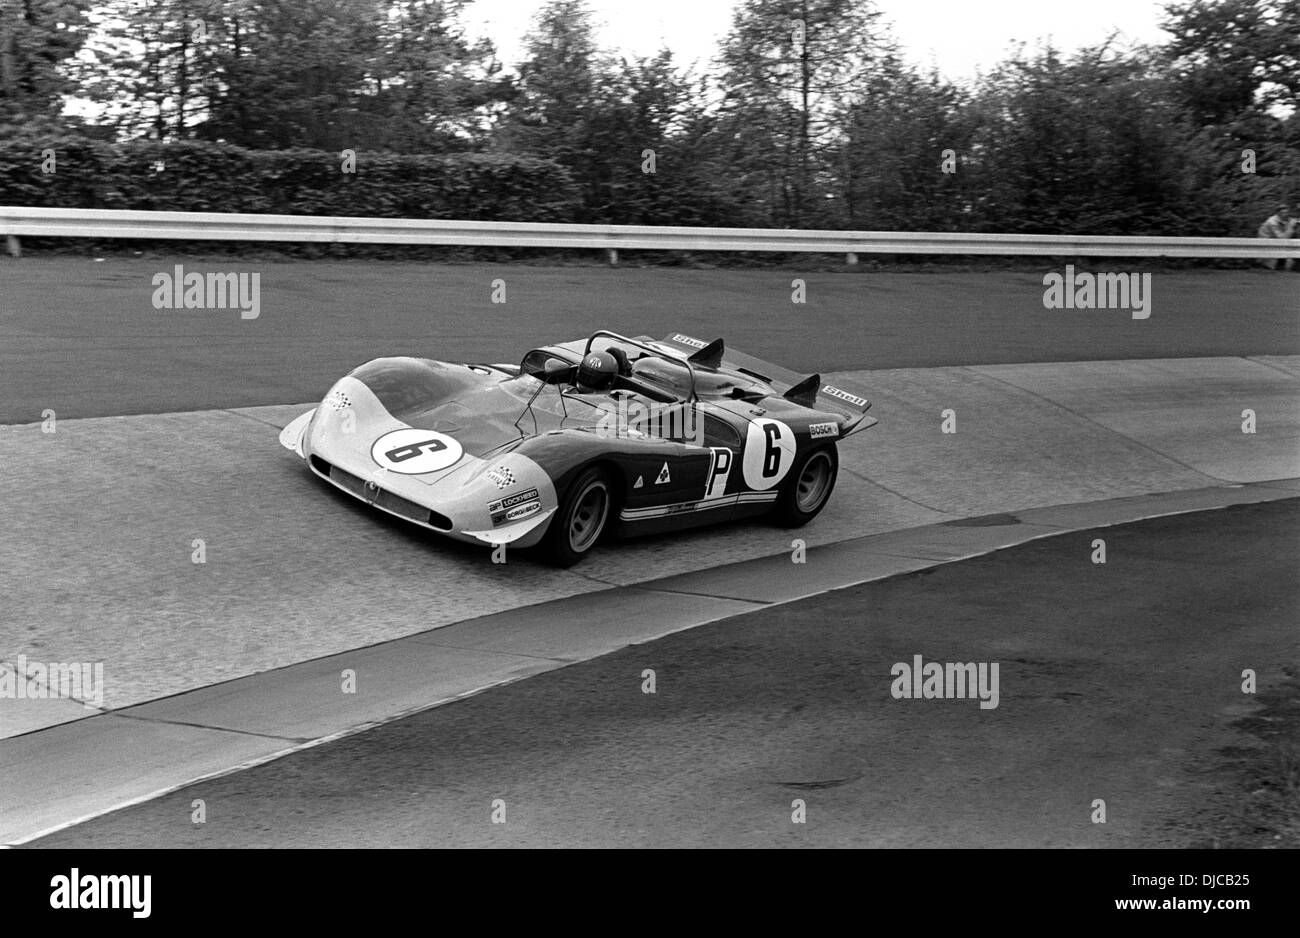 Stommelens-Piers Courage ist Alfa Romeo T33-3 auf dem Karussel. Nürburgring 1000kms, Deutschland 31. Mai 1970. Stockfoto